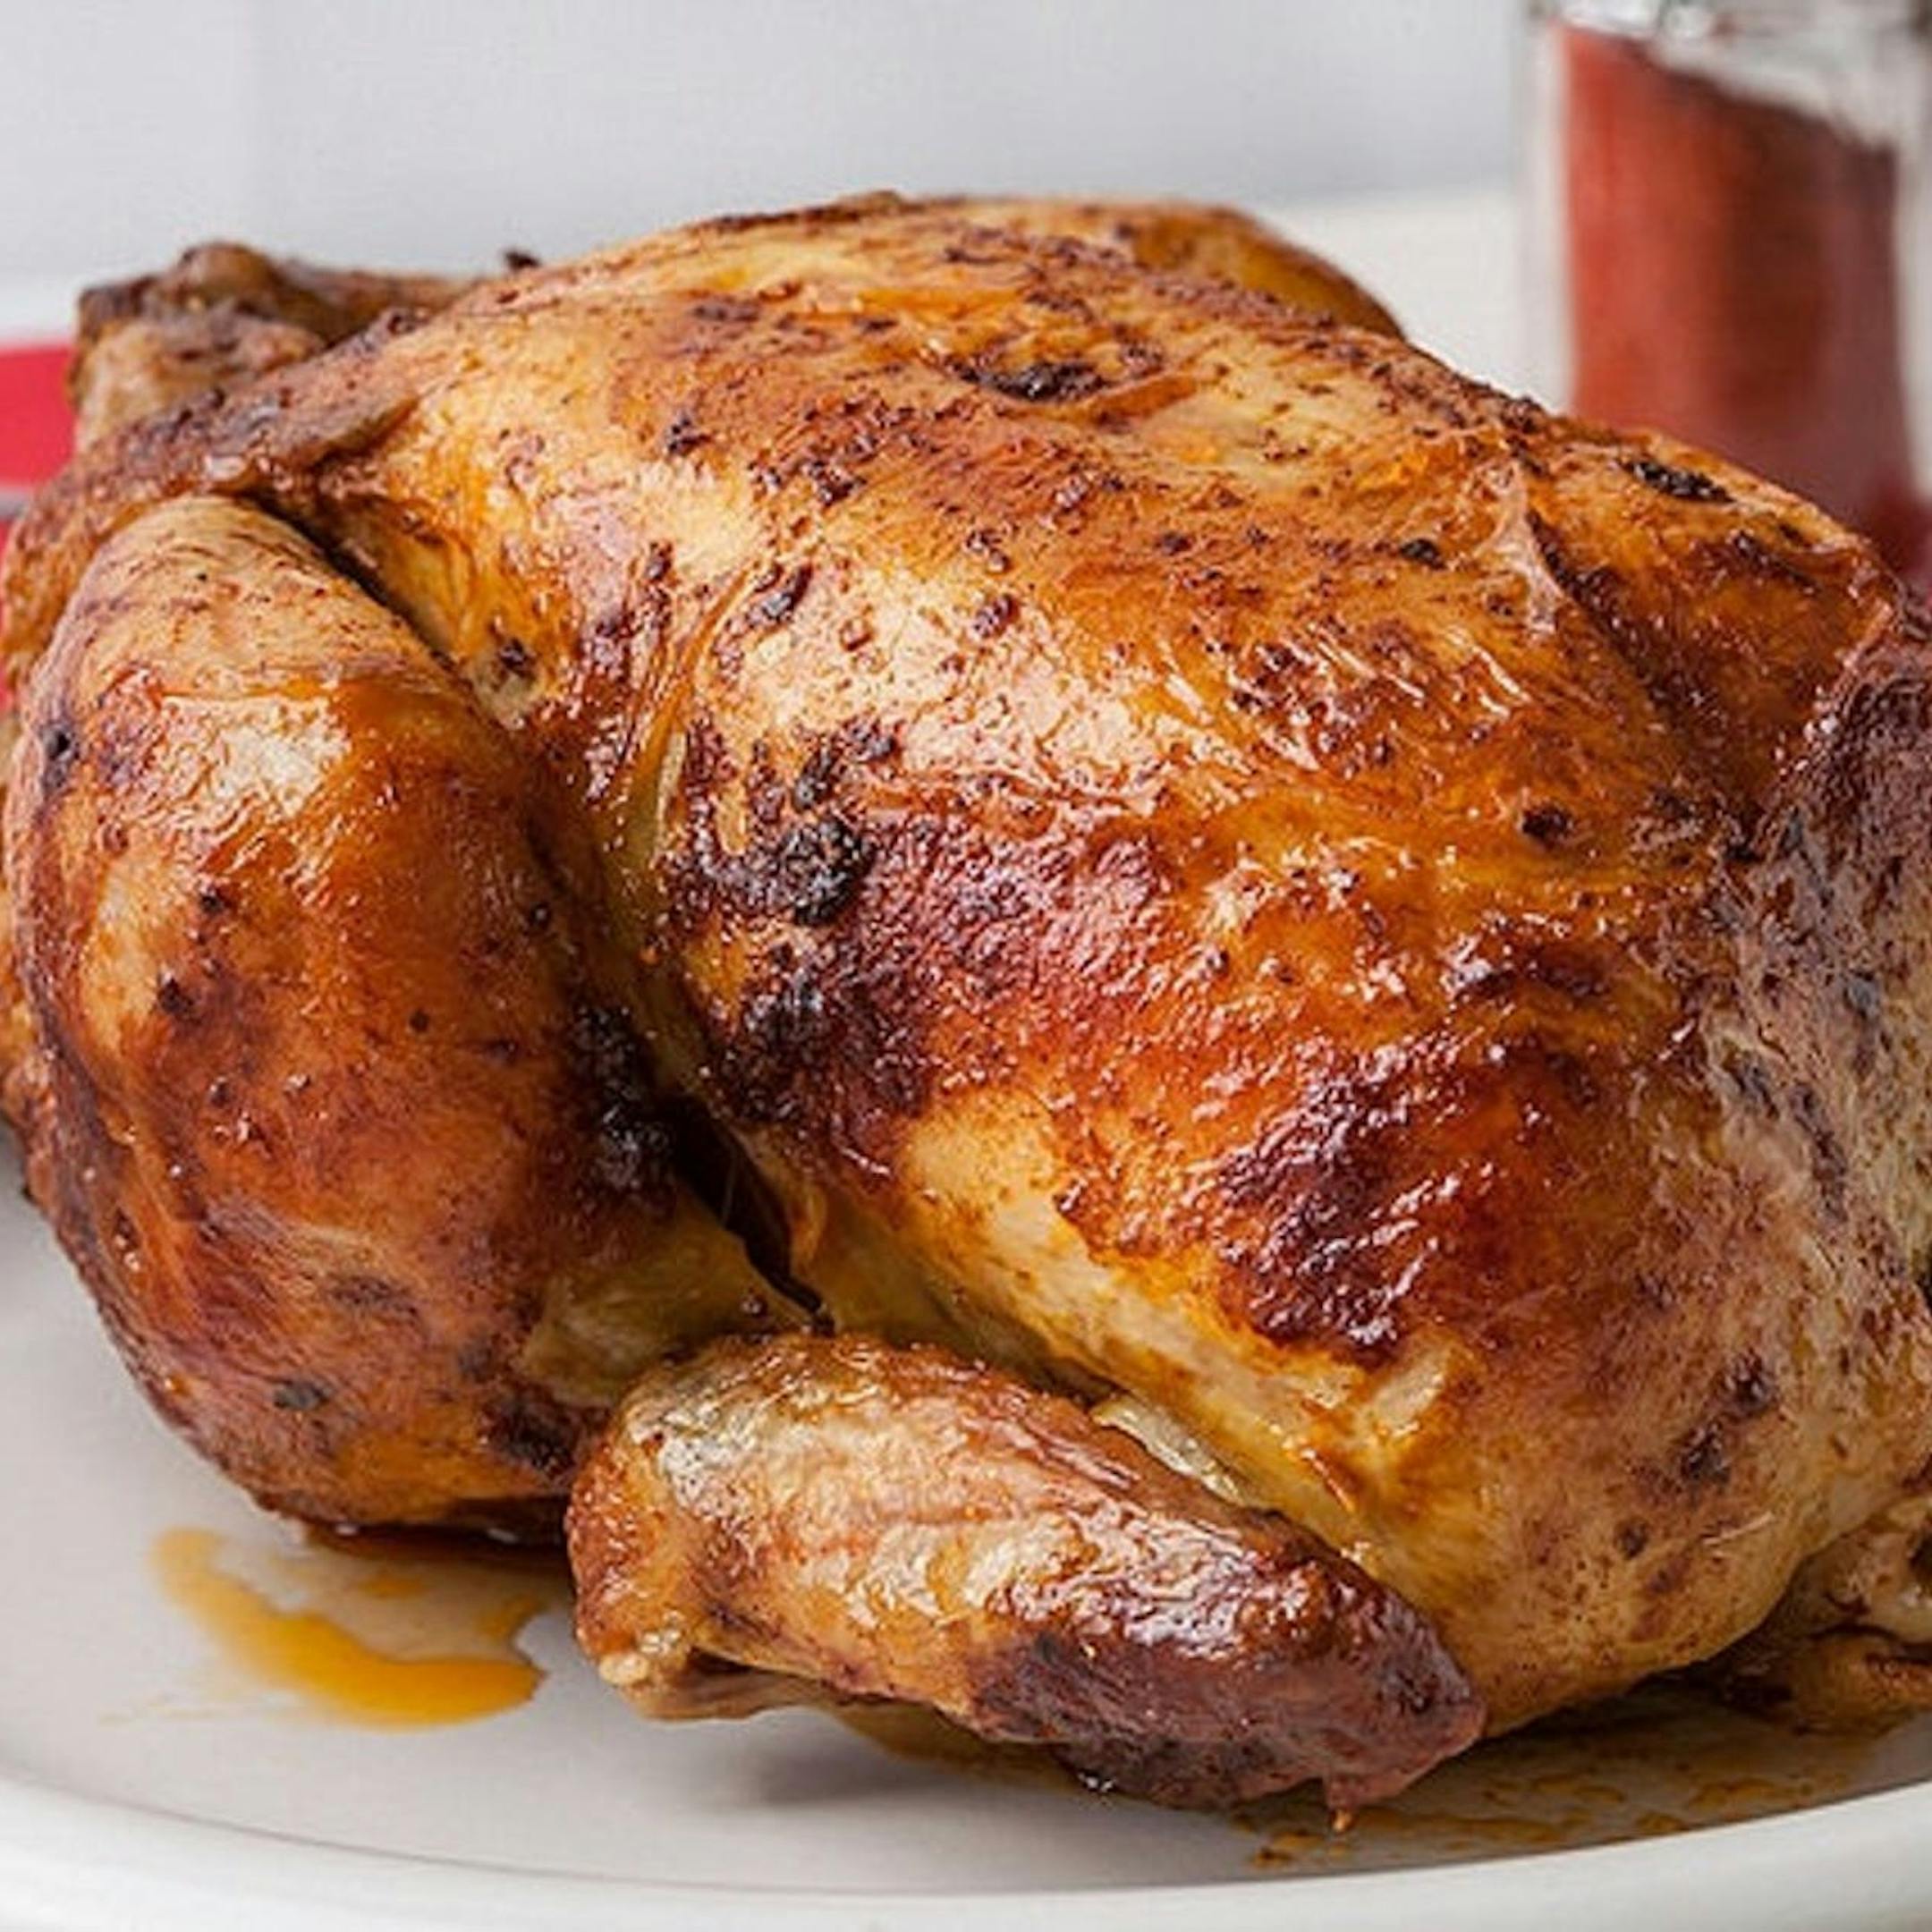 Ken Gauthreaux's Thanksgiving Baked Turkey